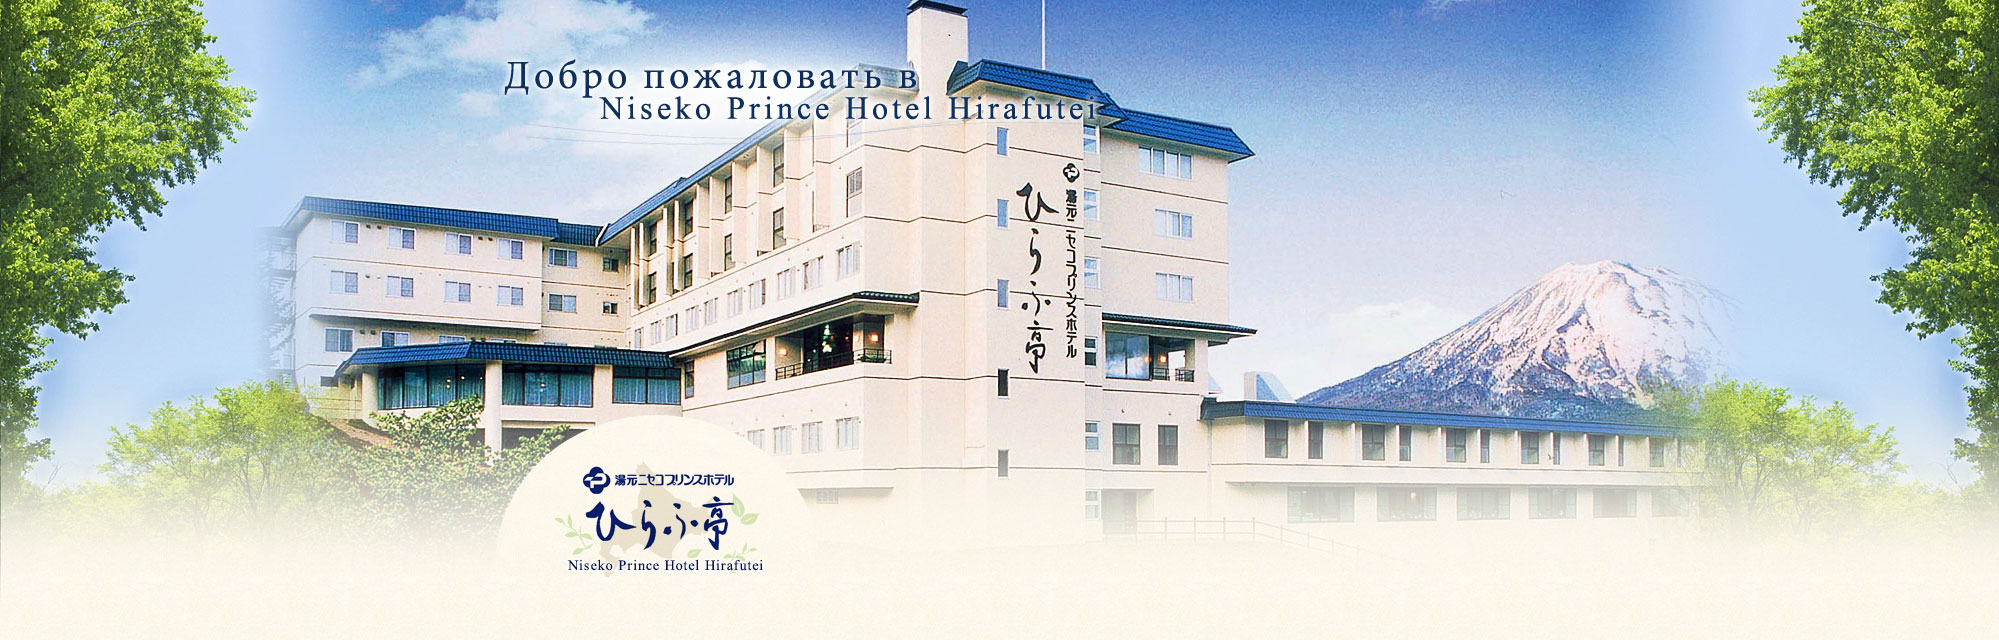 Hirafutei prince hotel japan